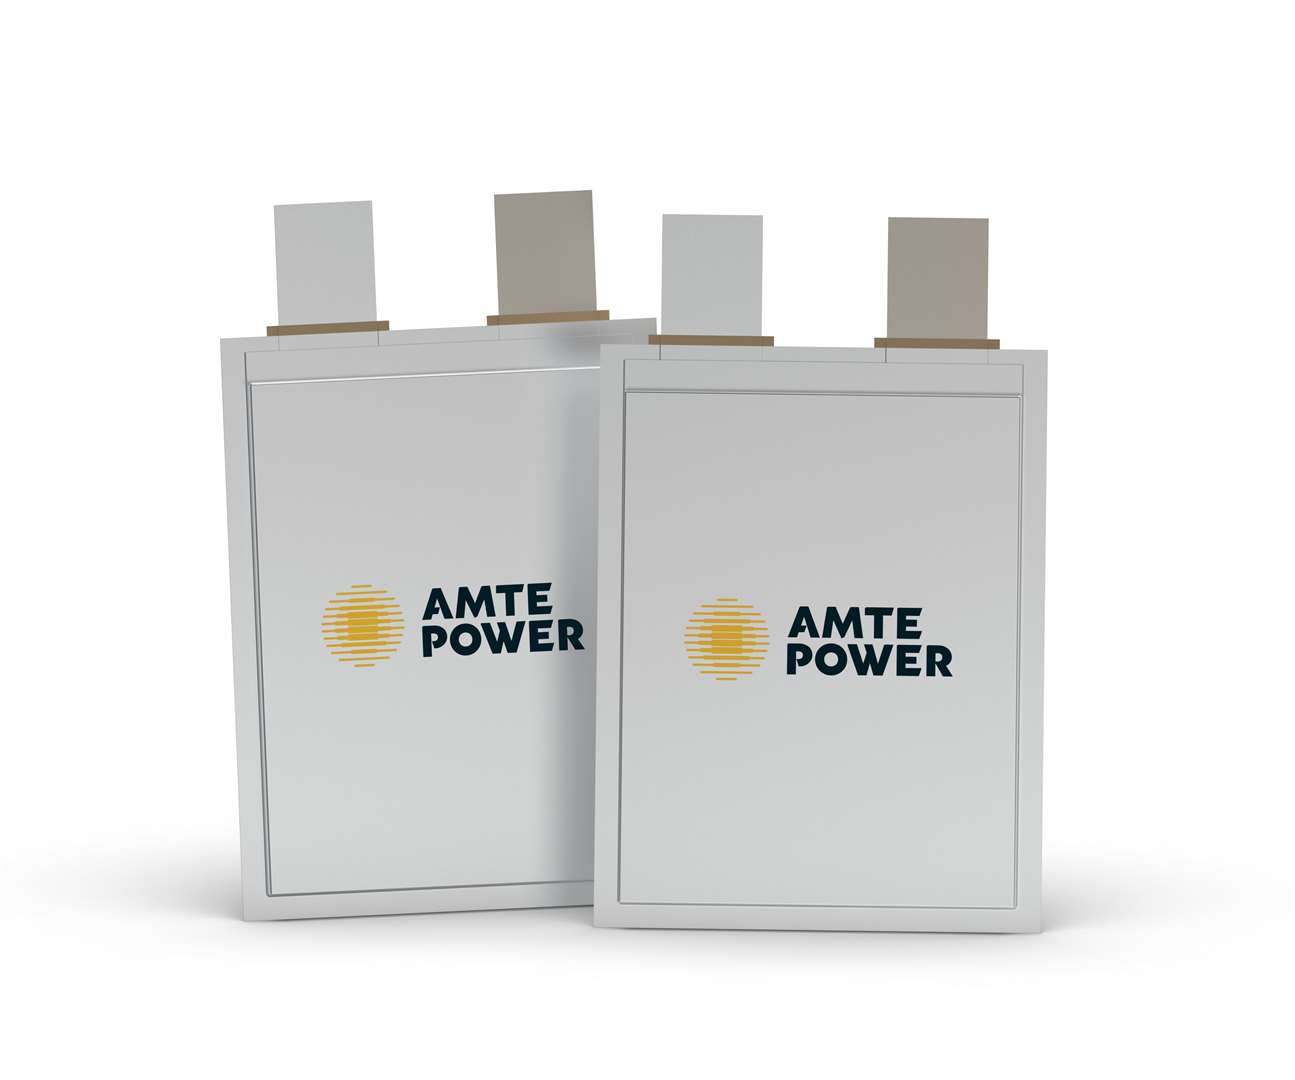 AMTE Power's Ultra Safe cell